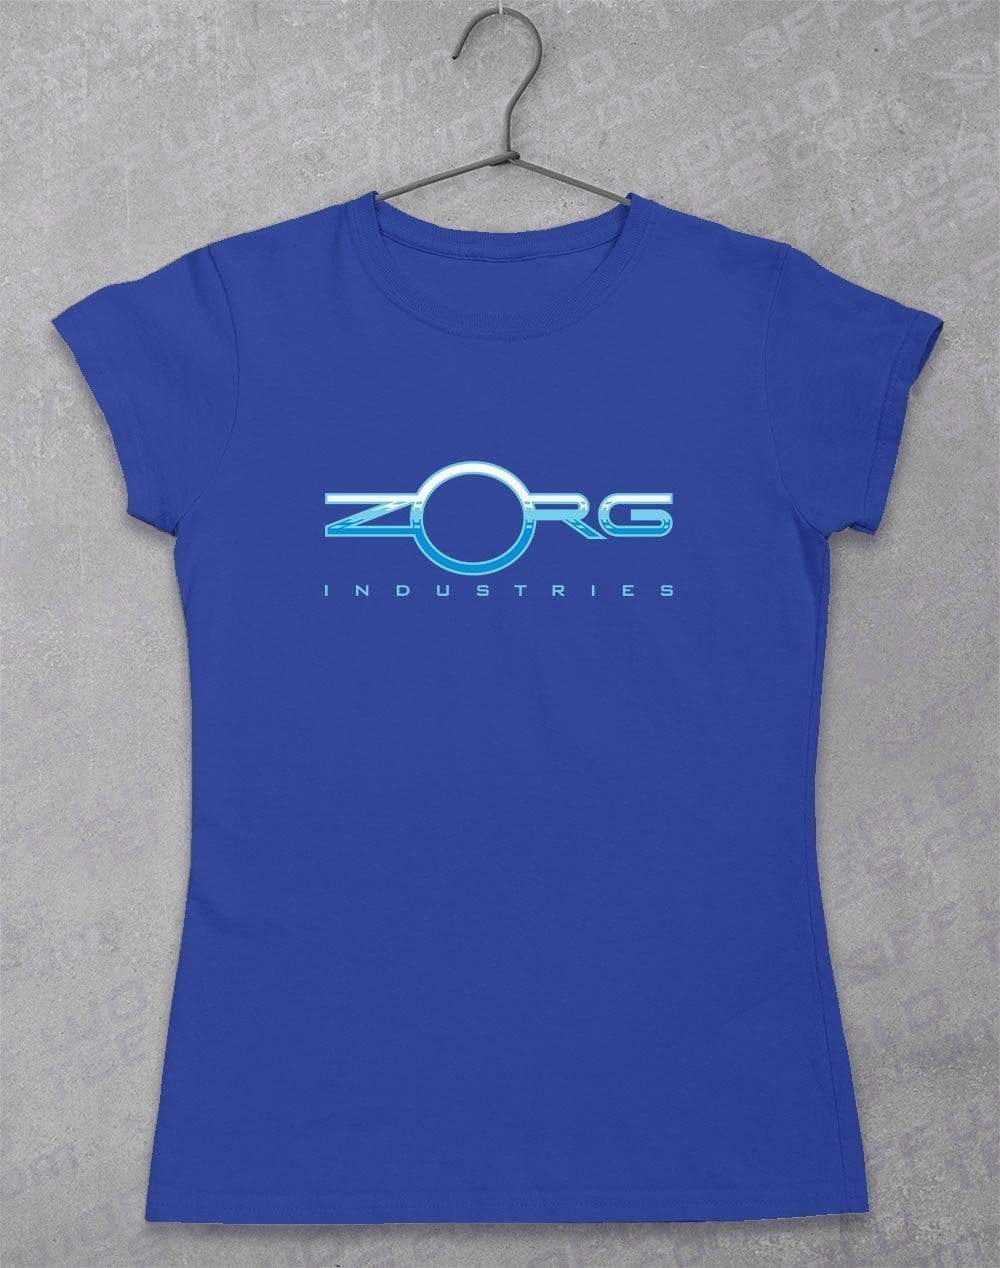 Zorg Women's T-Shirt 8-10 / Royal  - Off World Tees